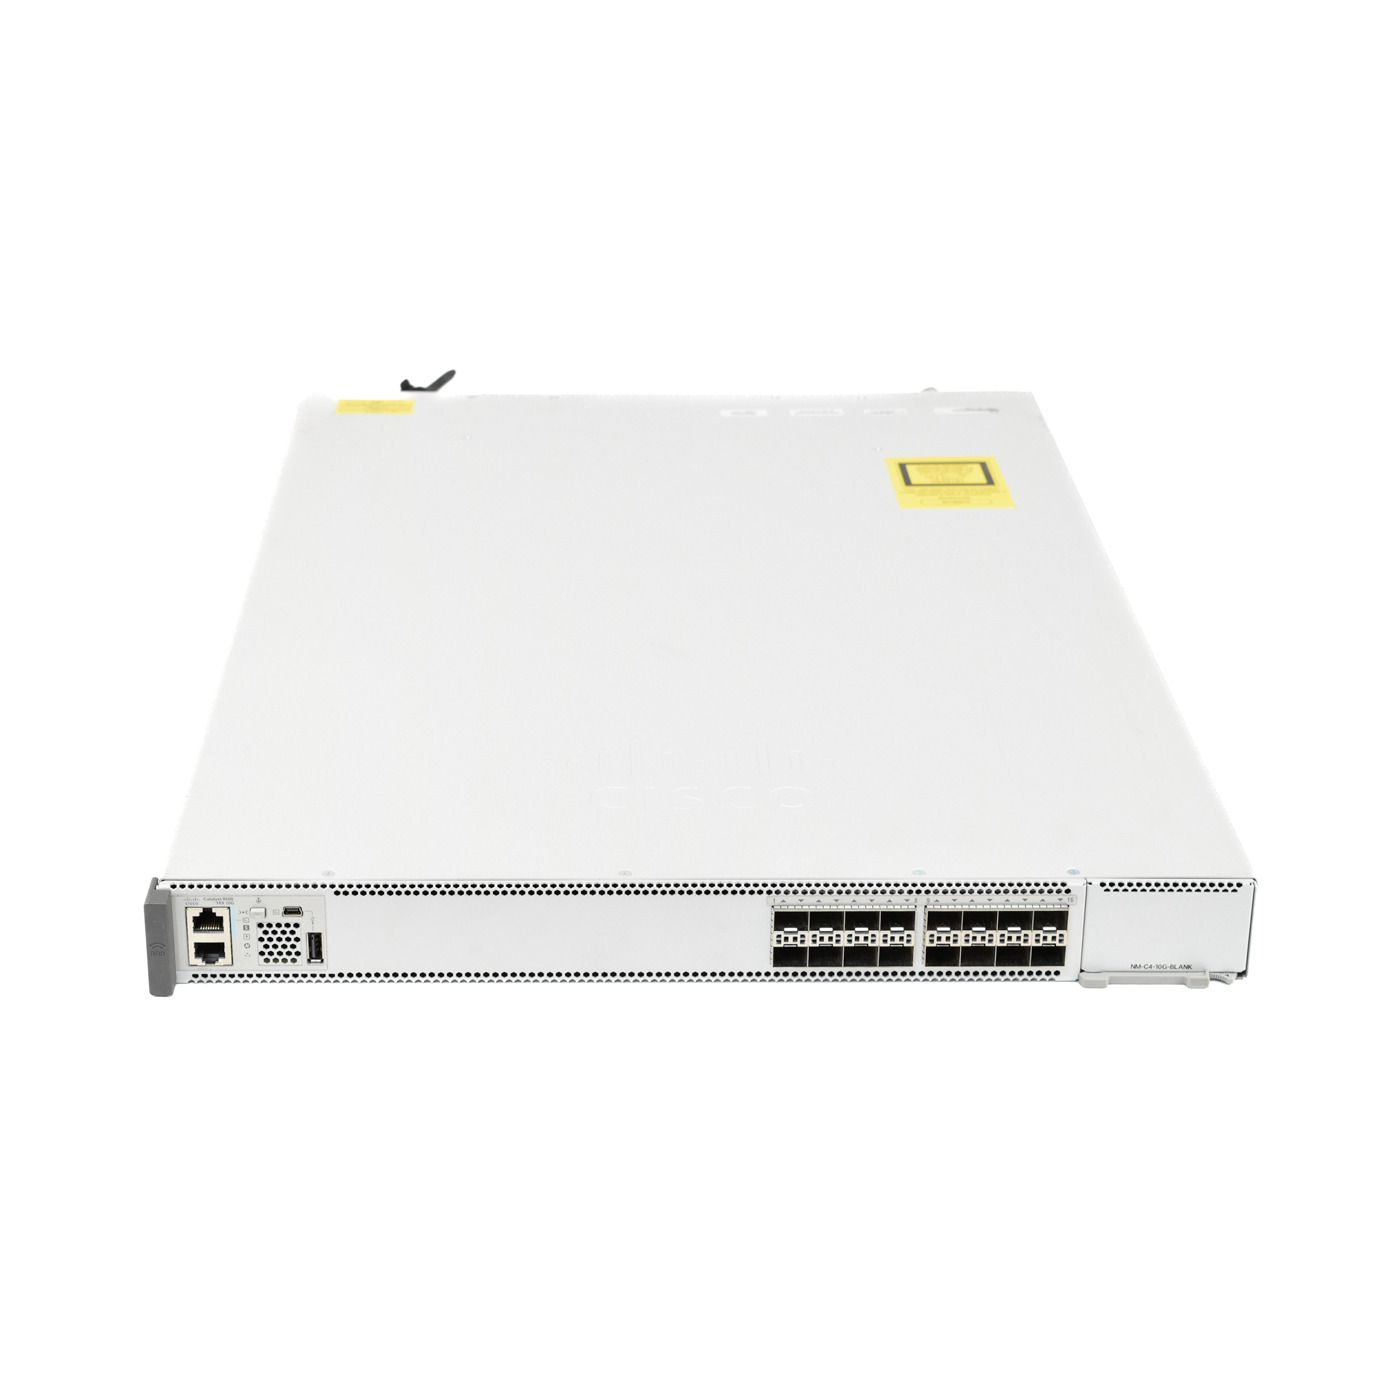 Cisco C9500-16X-A Cisco Catalyst 9500 40-port 10G switch